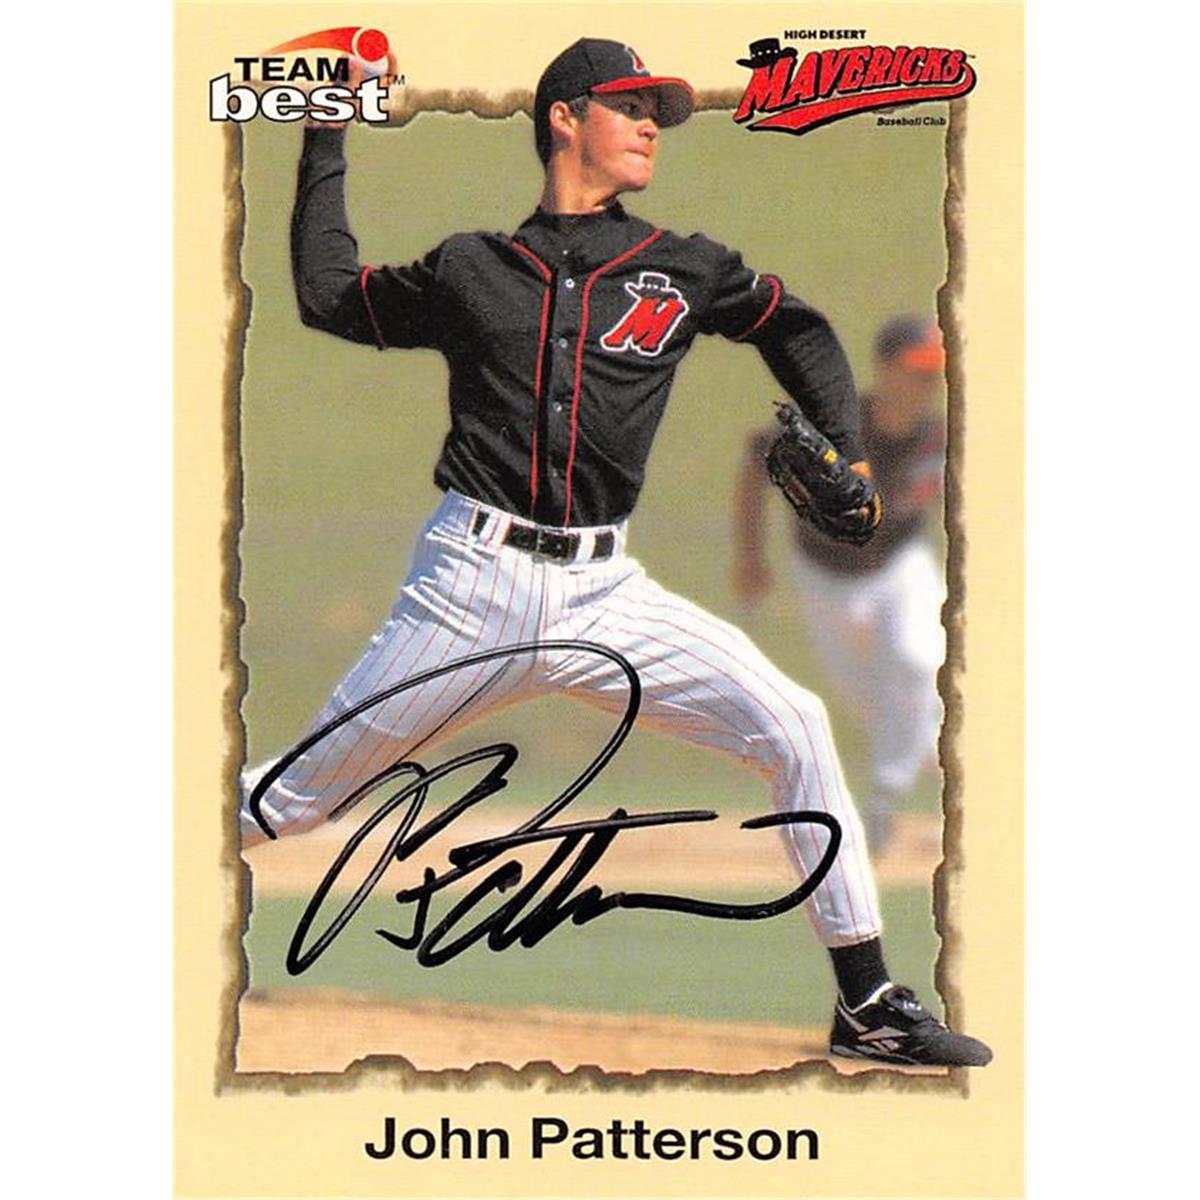 465586 John Patterson Autographed South Bend, Arizona Diamondbacks Baseball Card 1998 Team Best Rookie No. 83 -  Autograph Warehouse